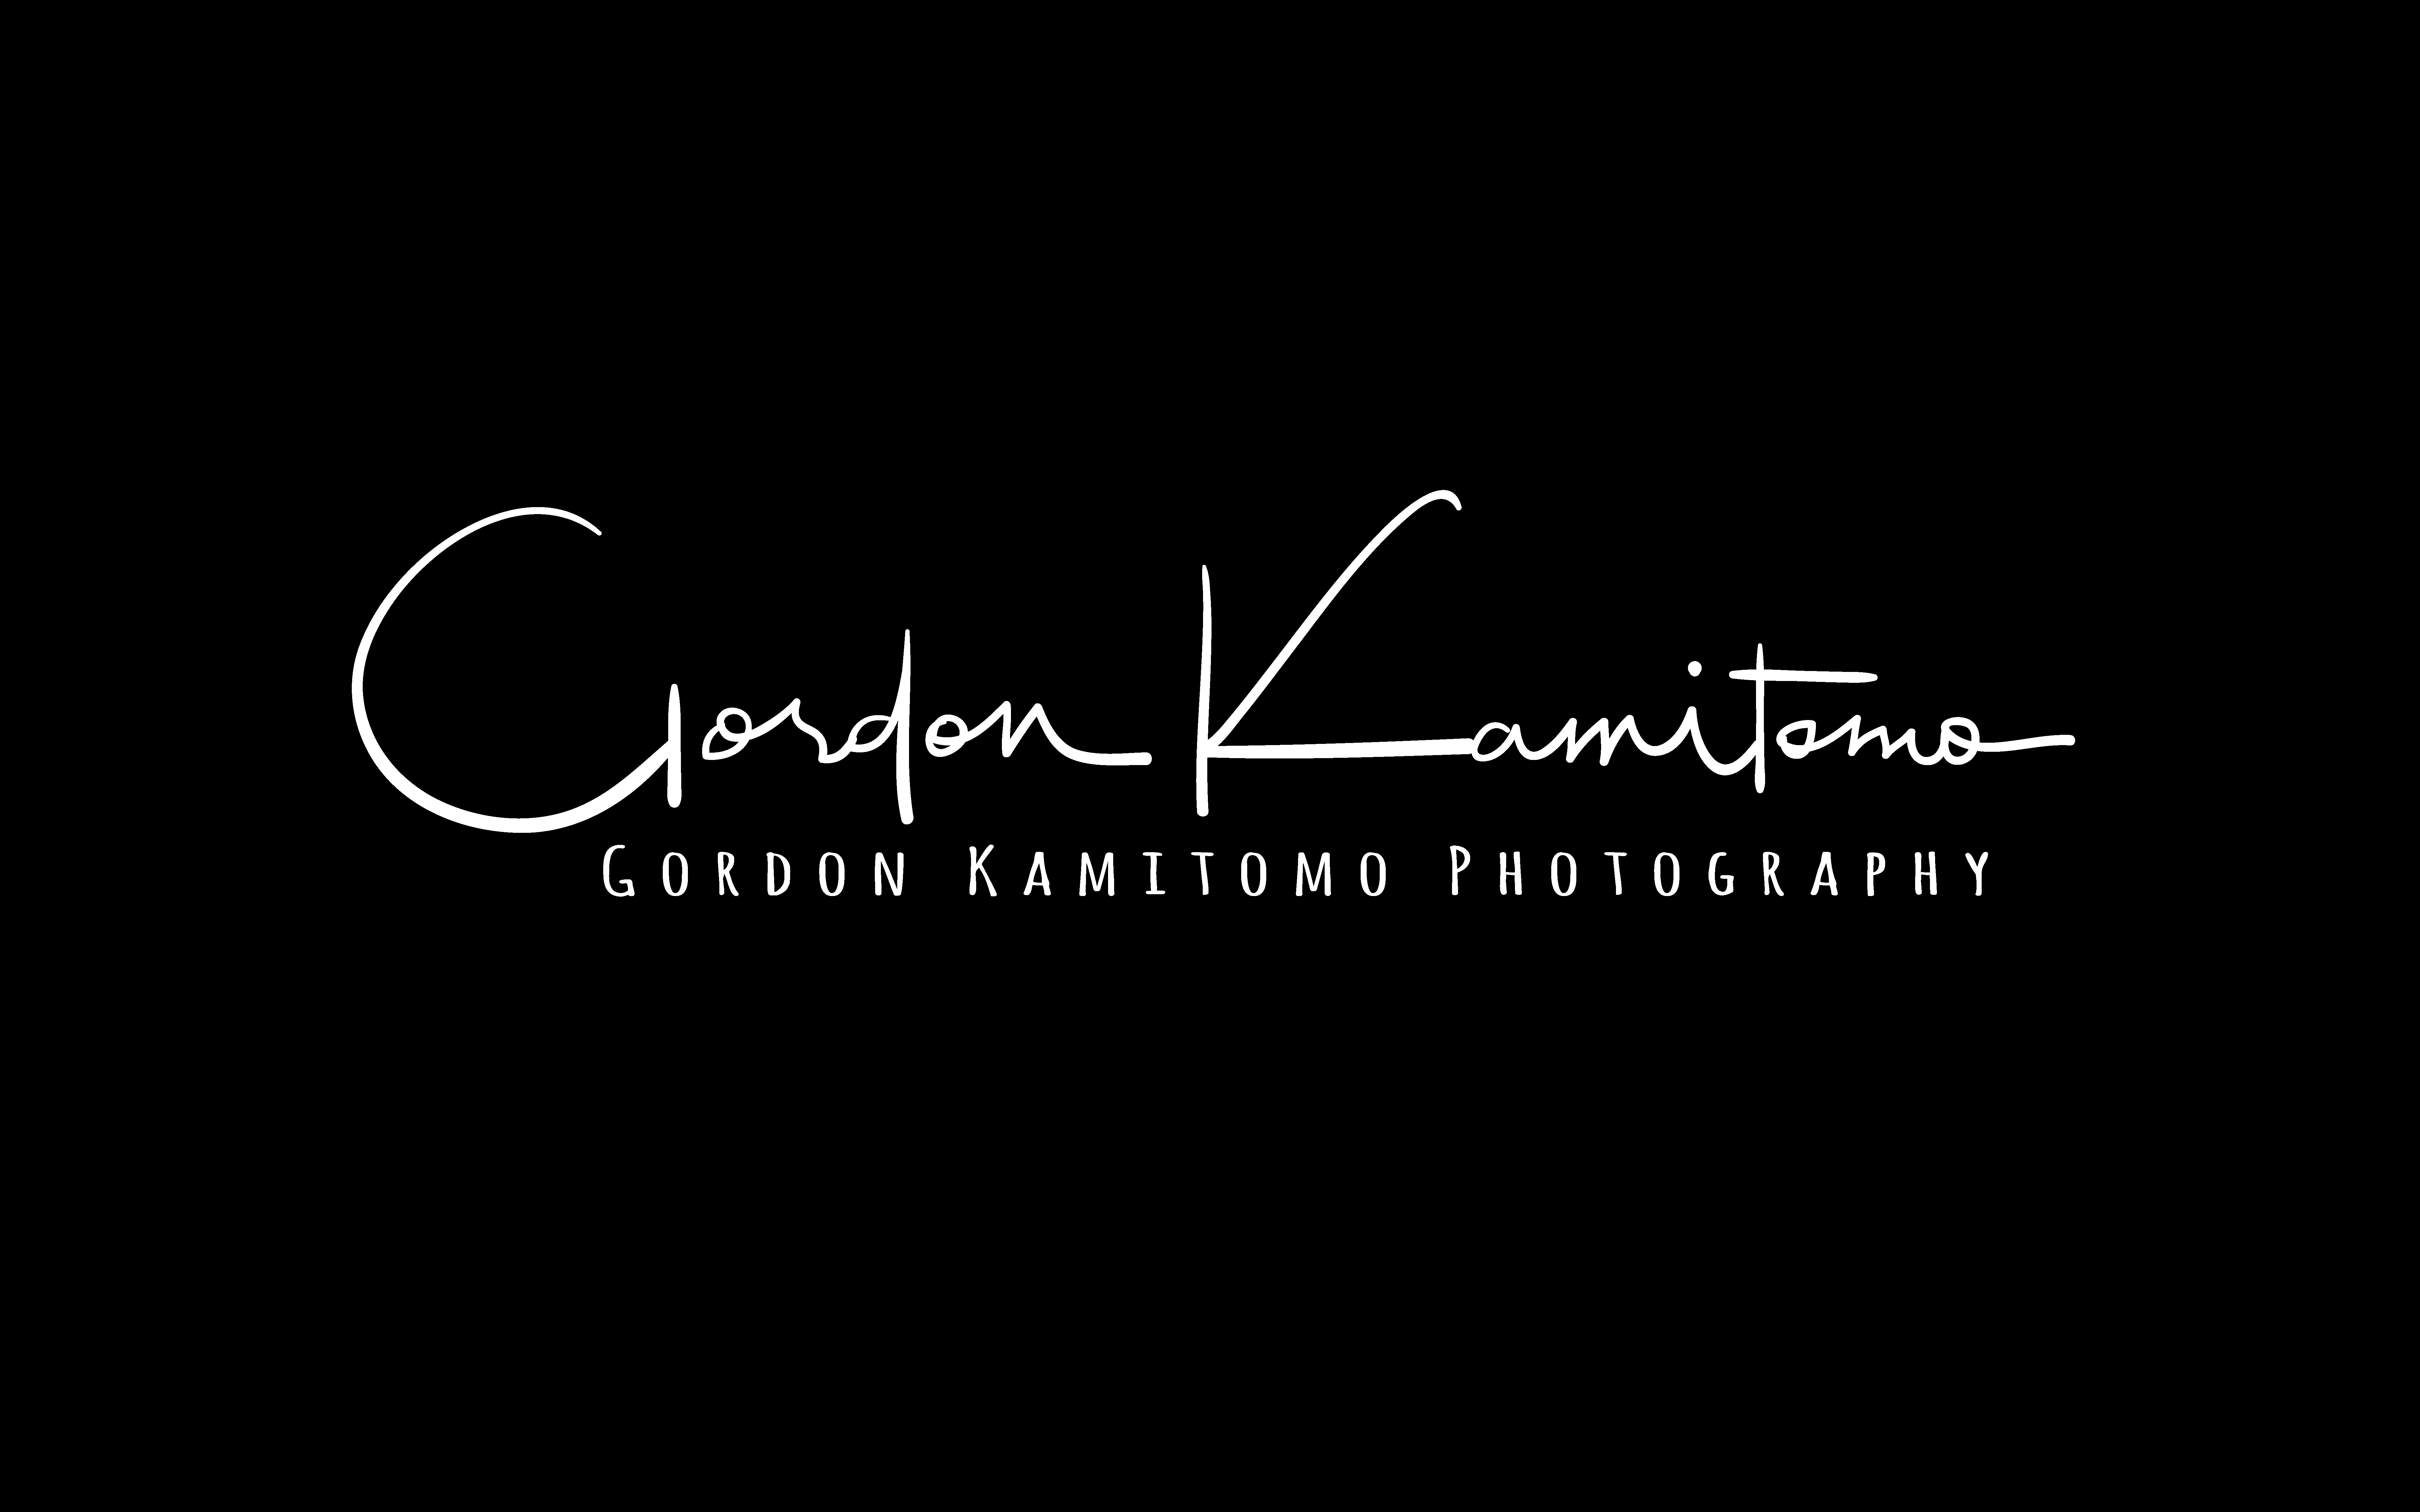 Gordon's Photography